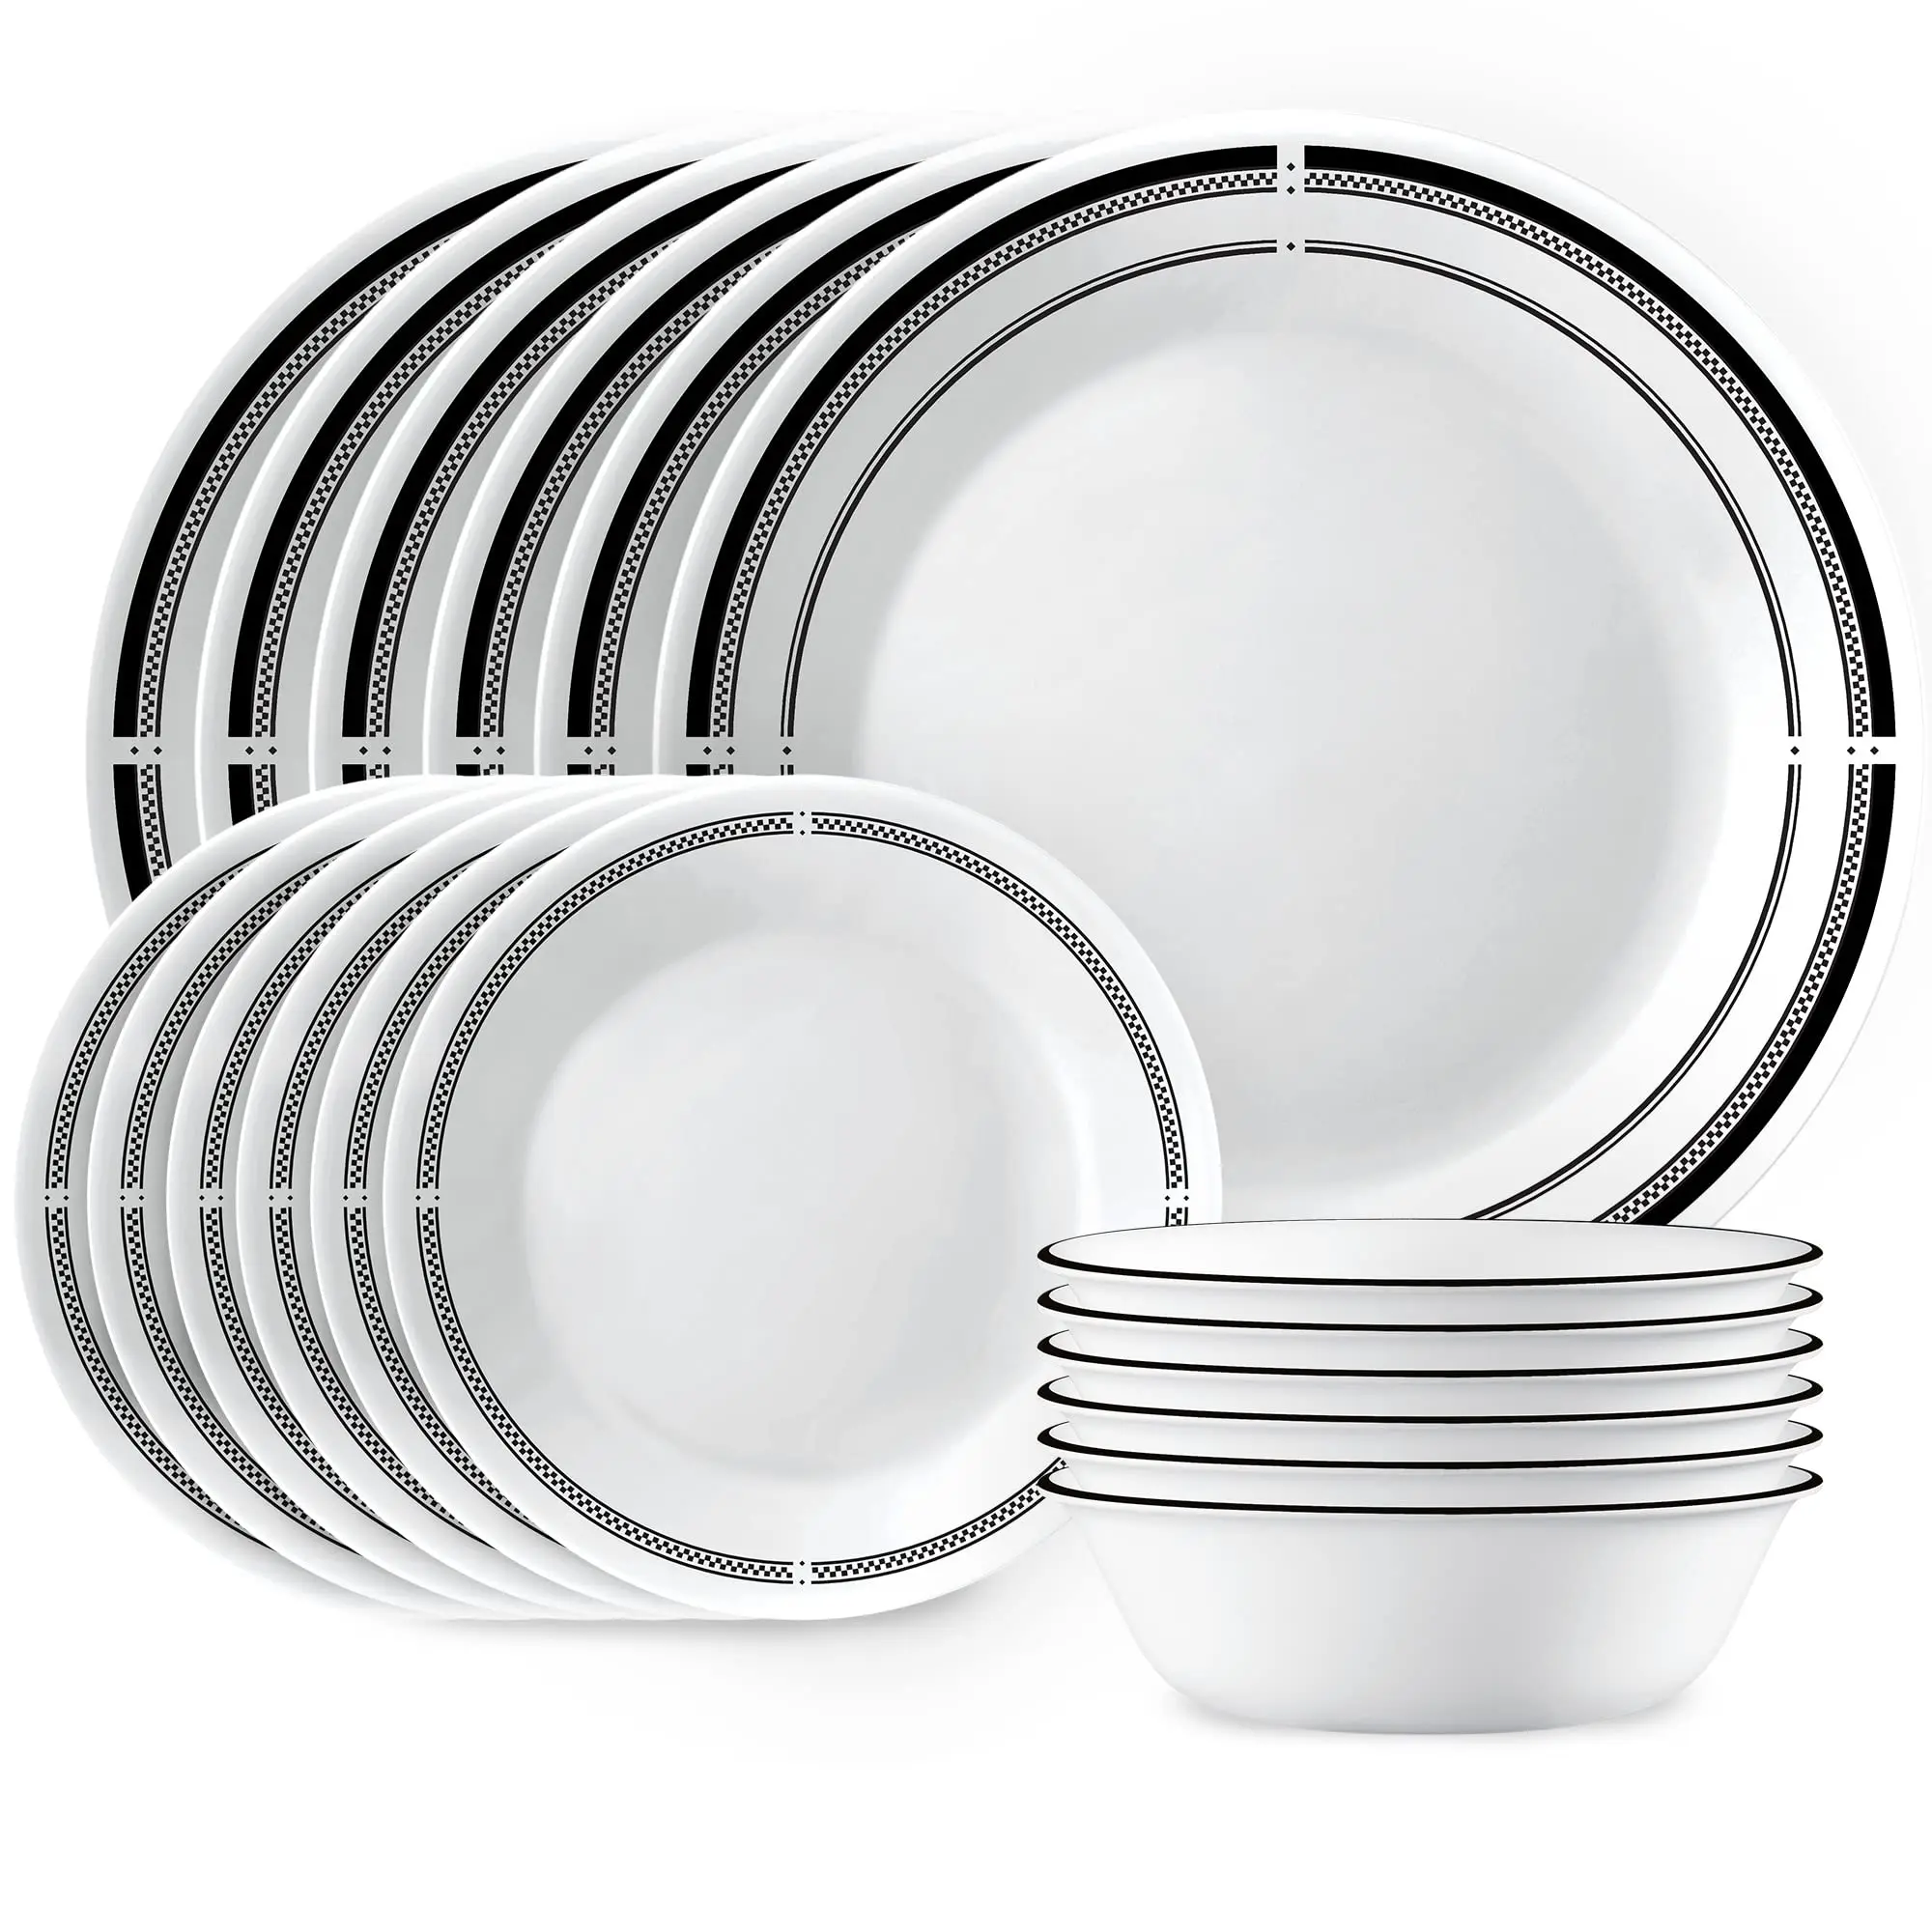 

18-Piece Round Dinnerware Set - Service for 6, Lightweight, Round Plates and Bowls Set, Microwave and Dishwasher Safe, Brasserie